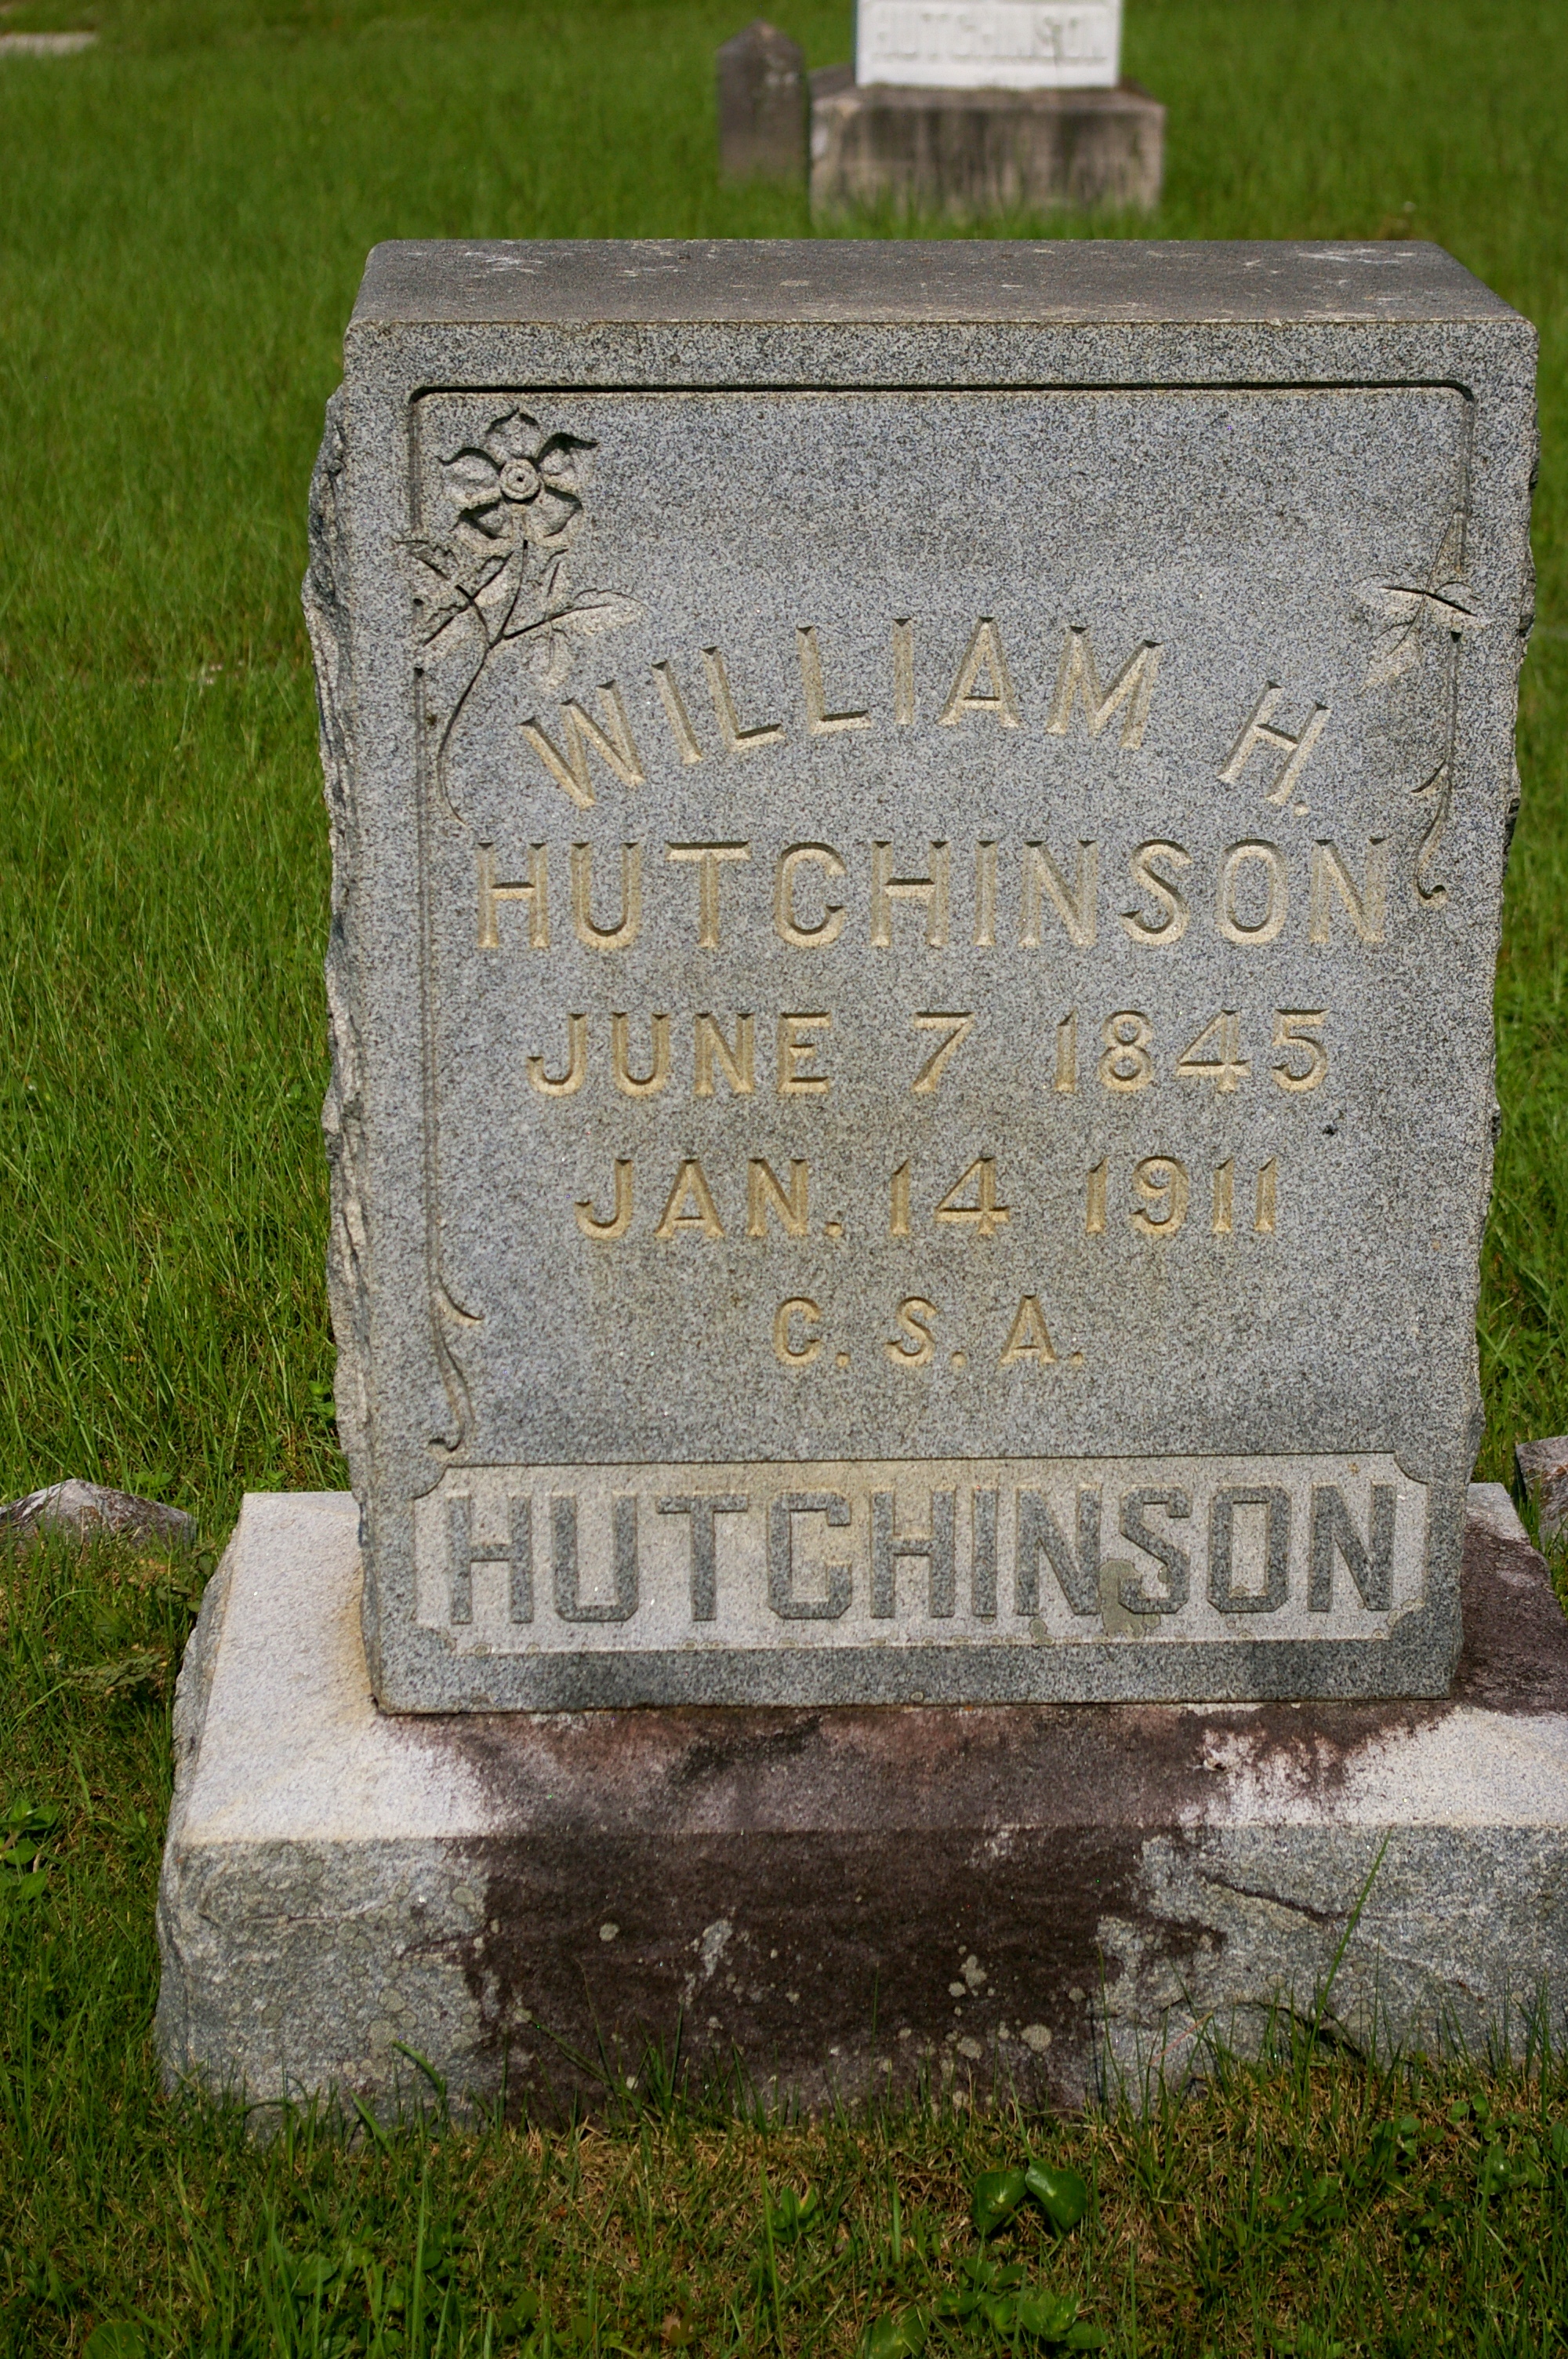 William H. Hutchinson